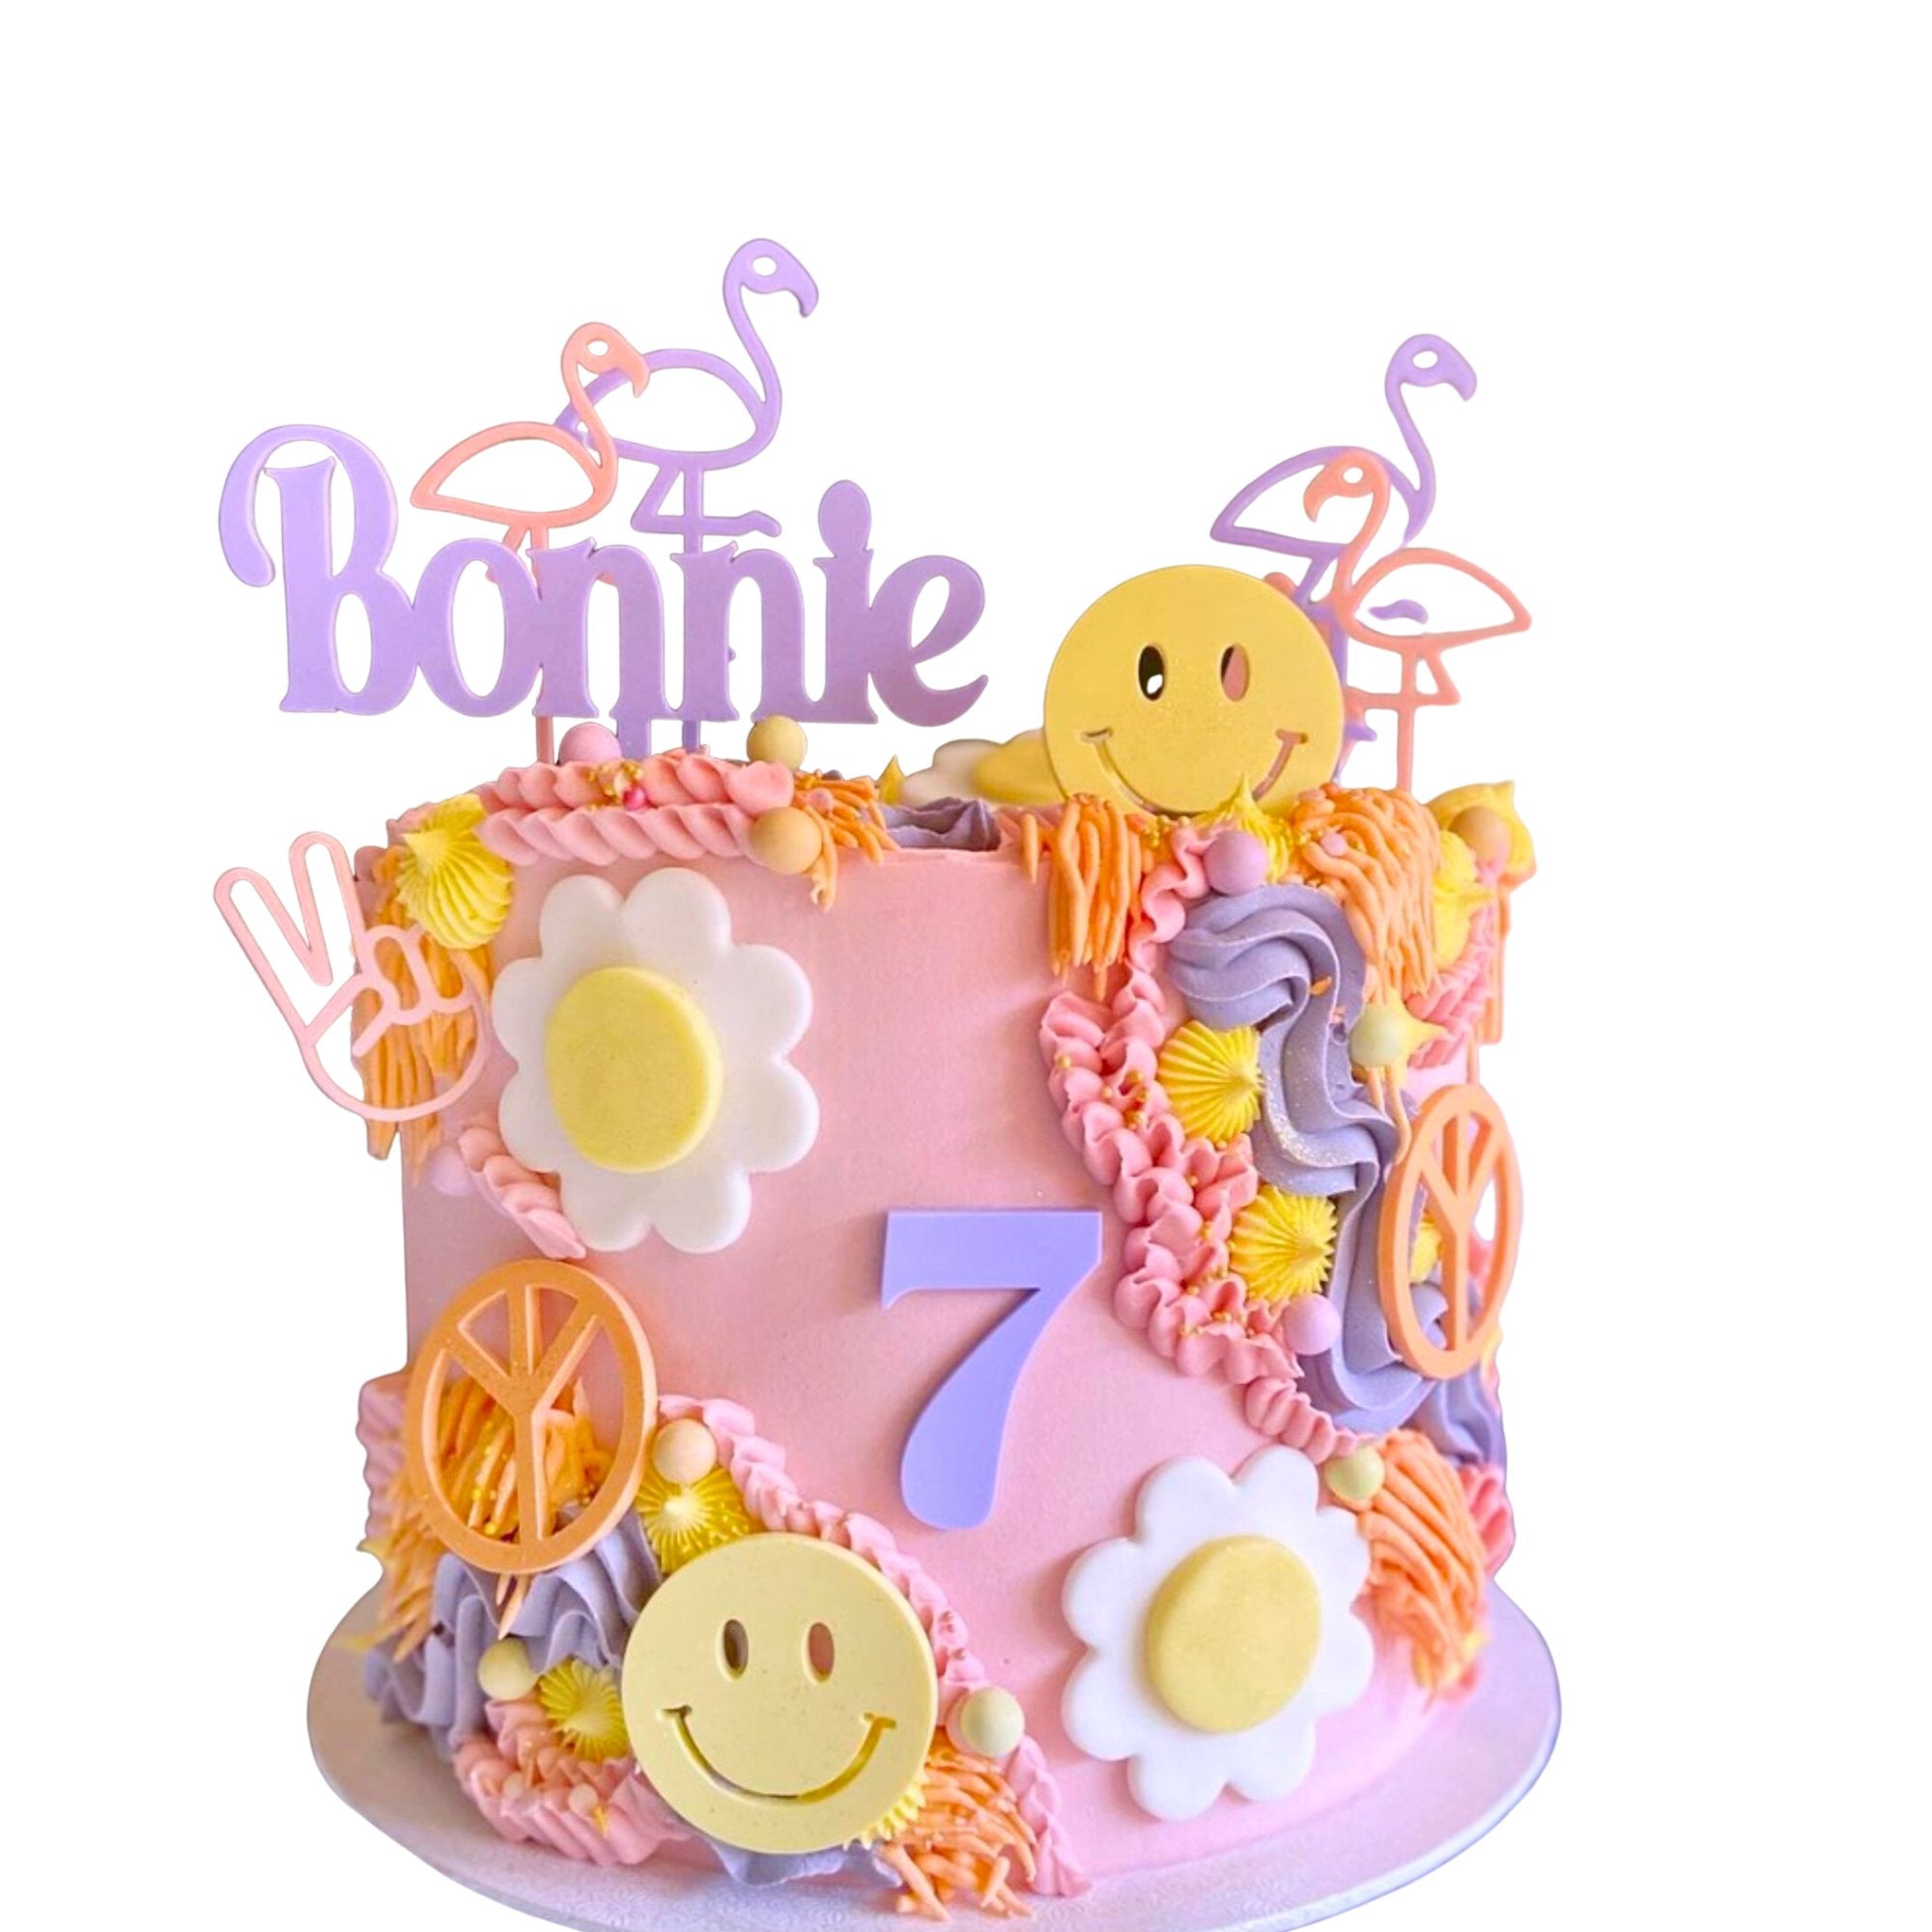 Retro Cake | Party cakes, Themed cakes, Cake